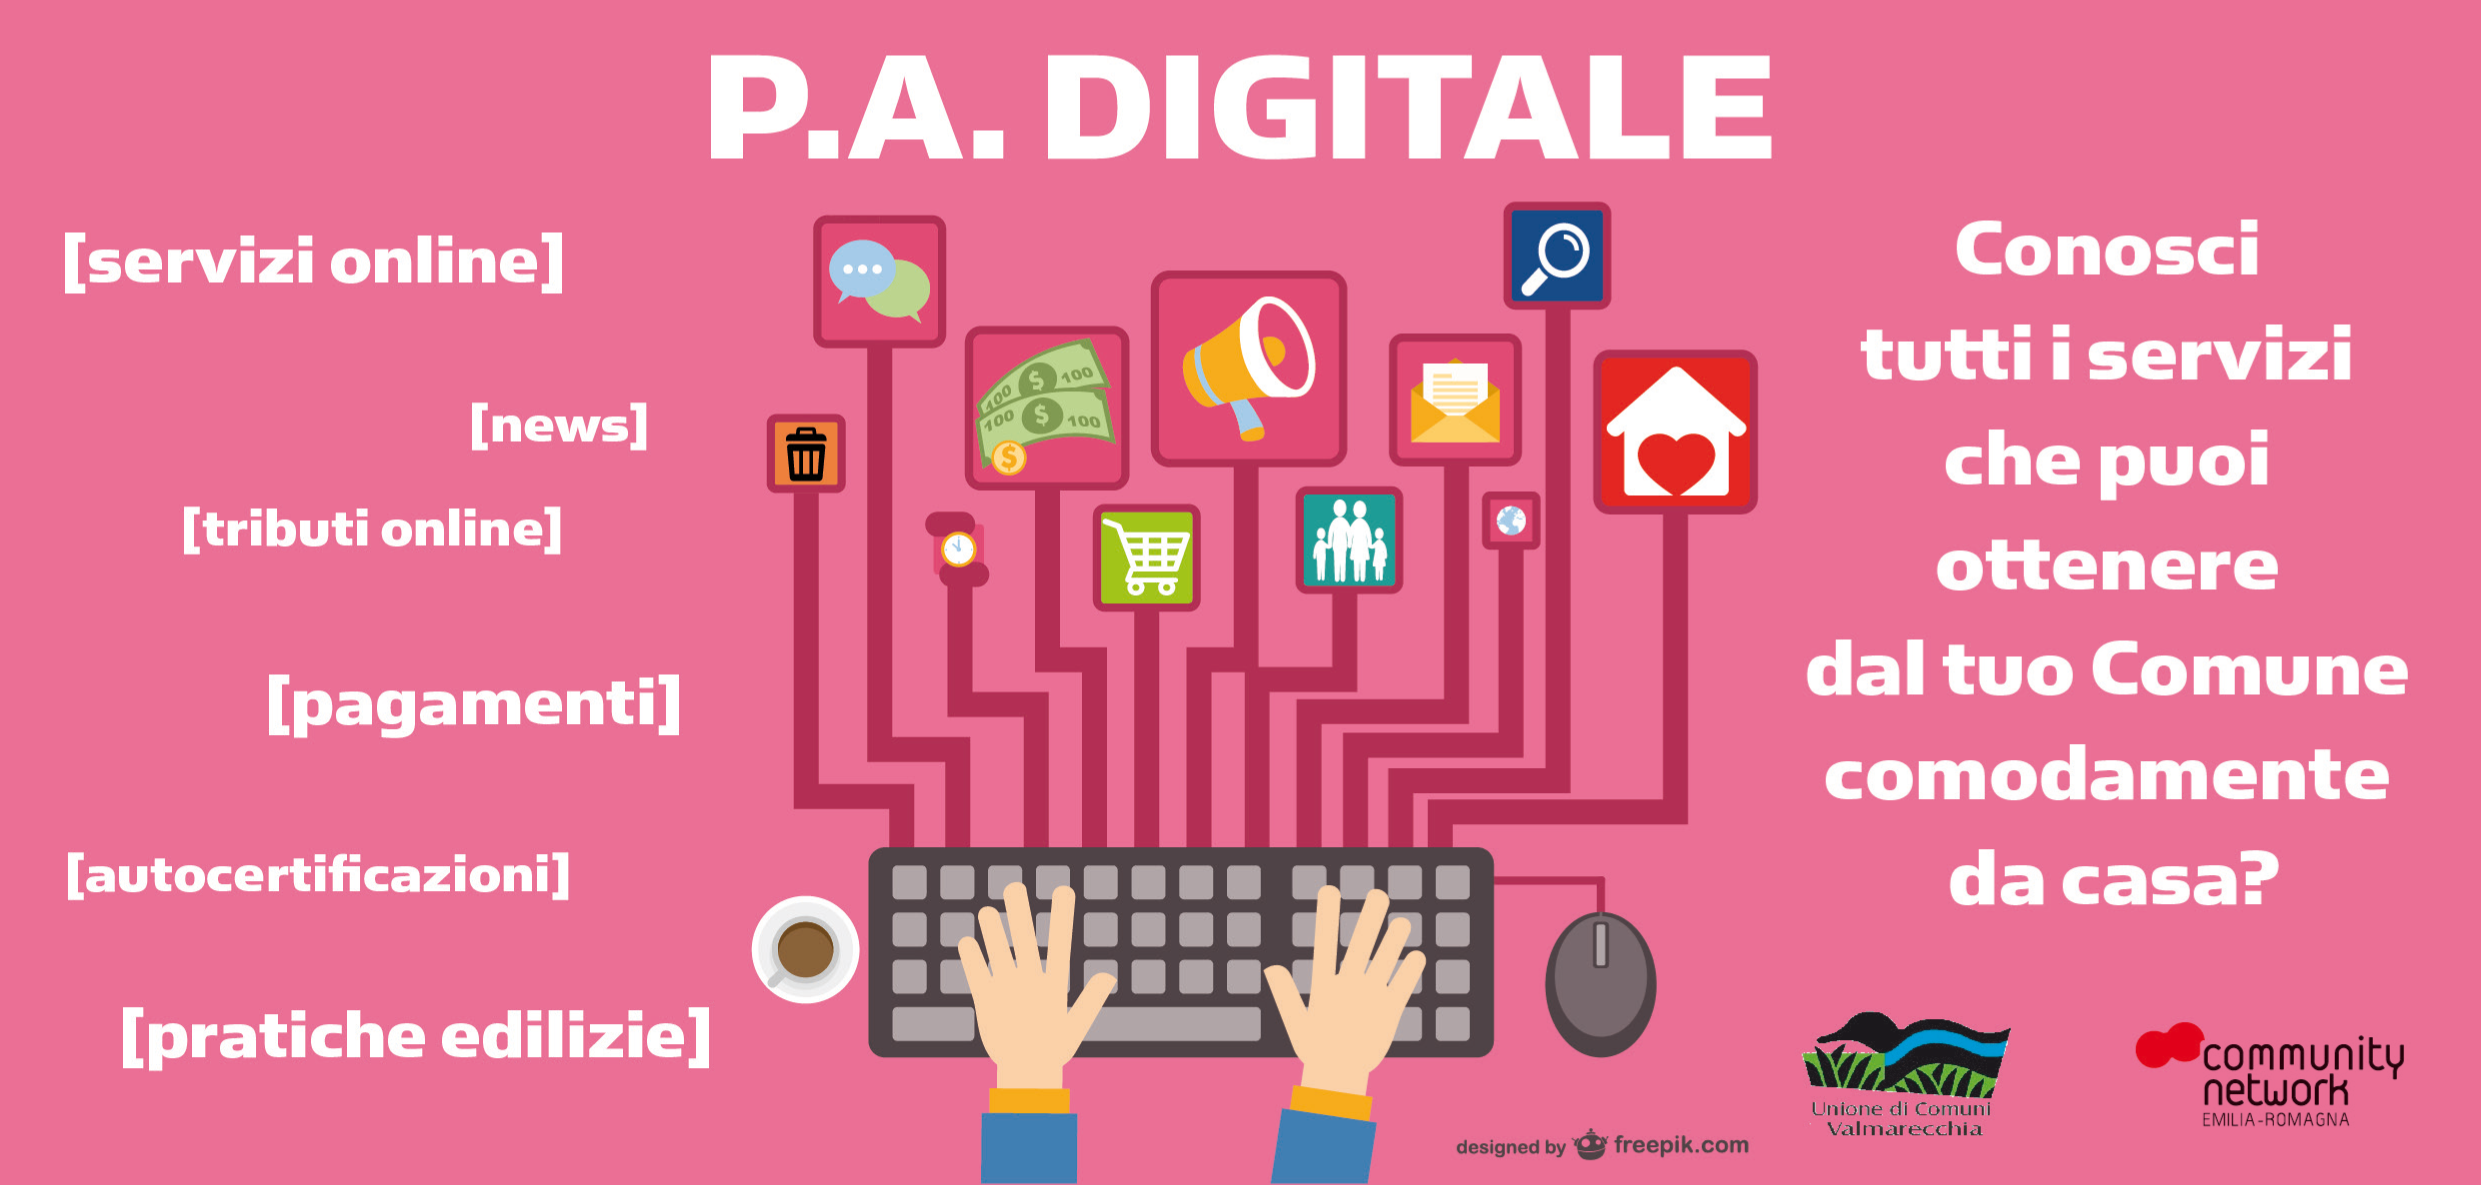 P.A. Digitale